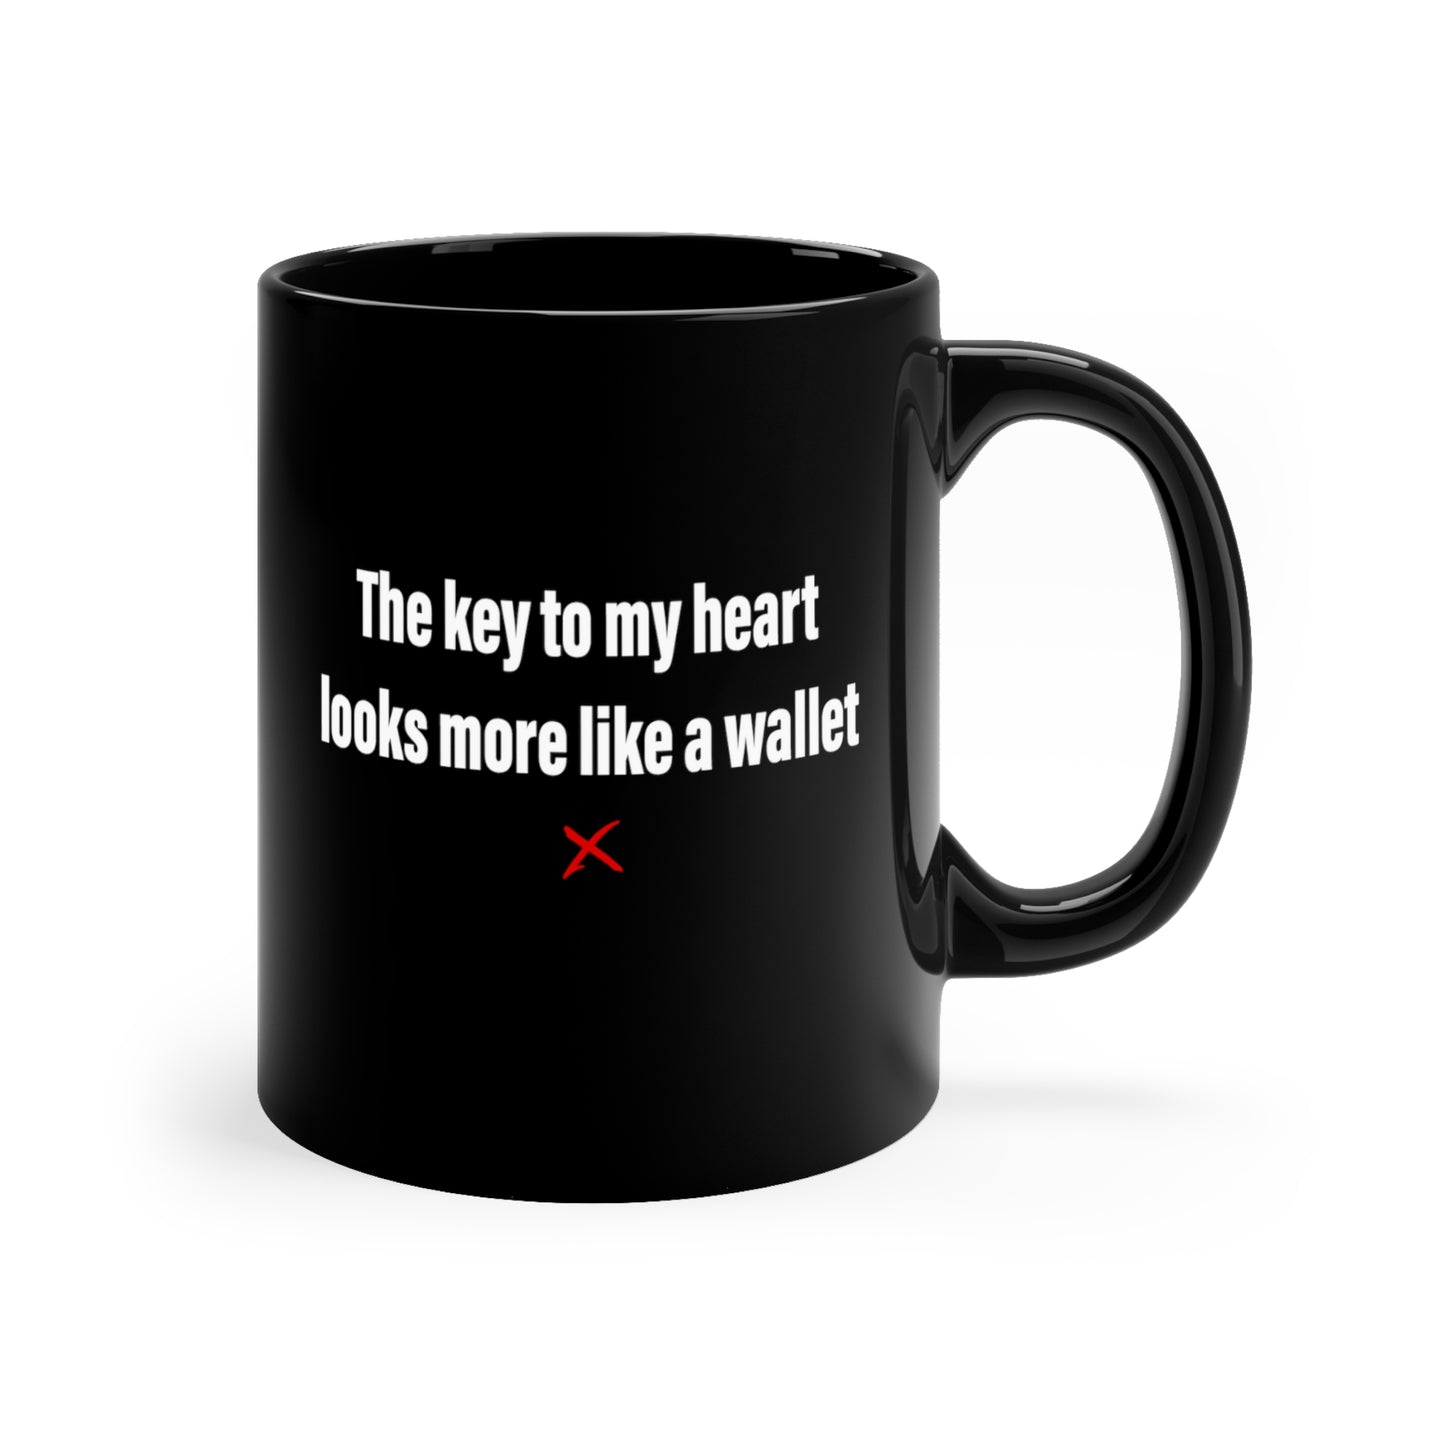 The key to my heart looks more like a wallet - Mug